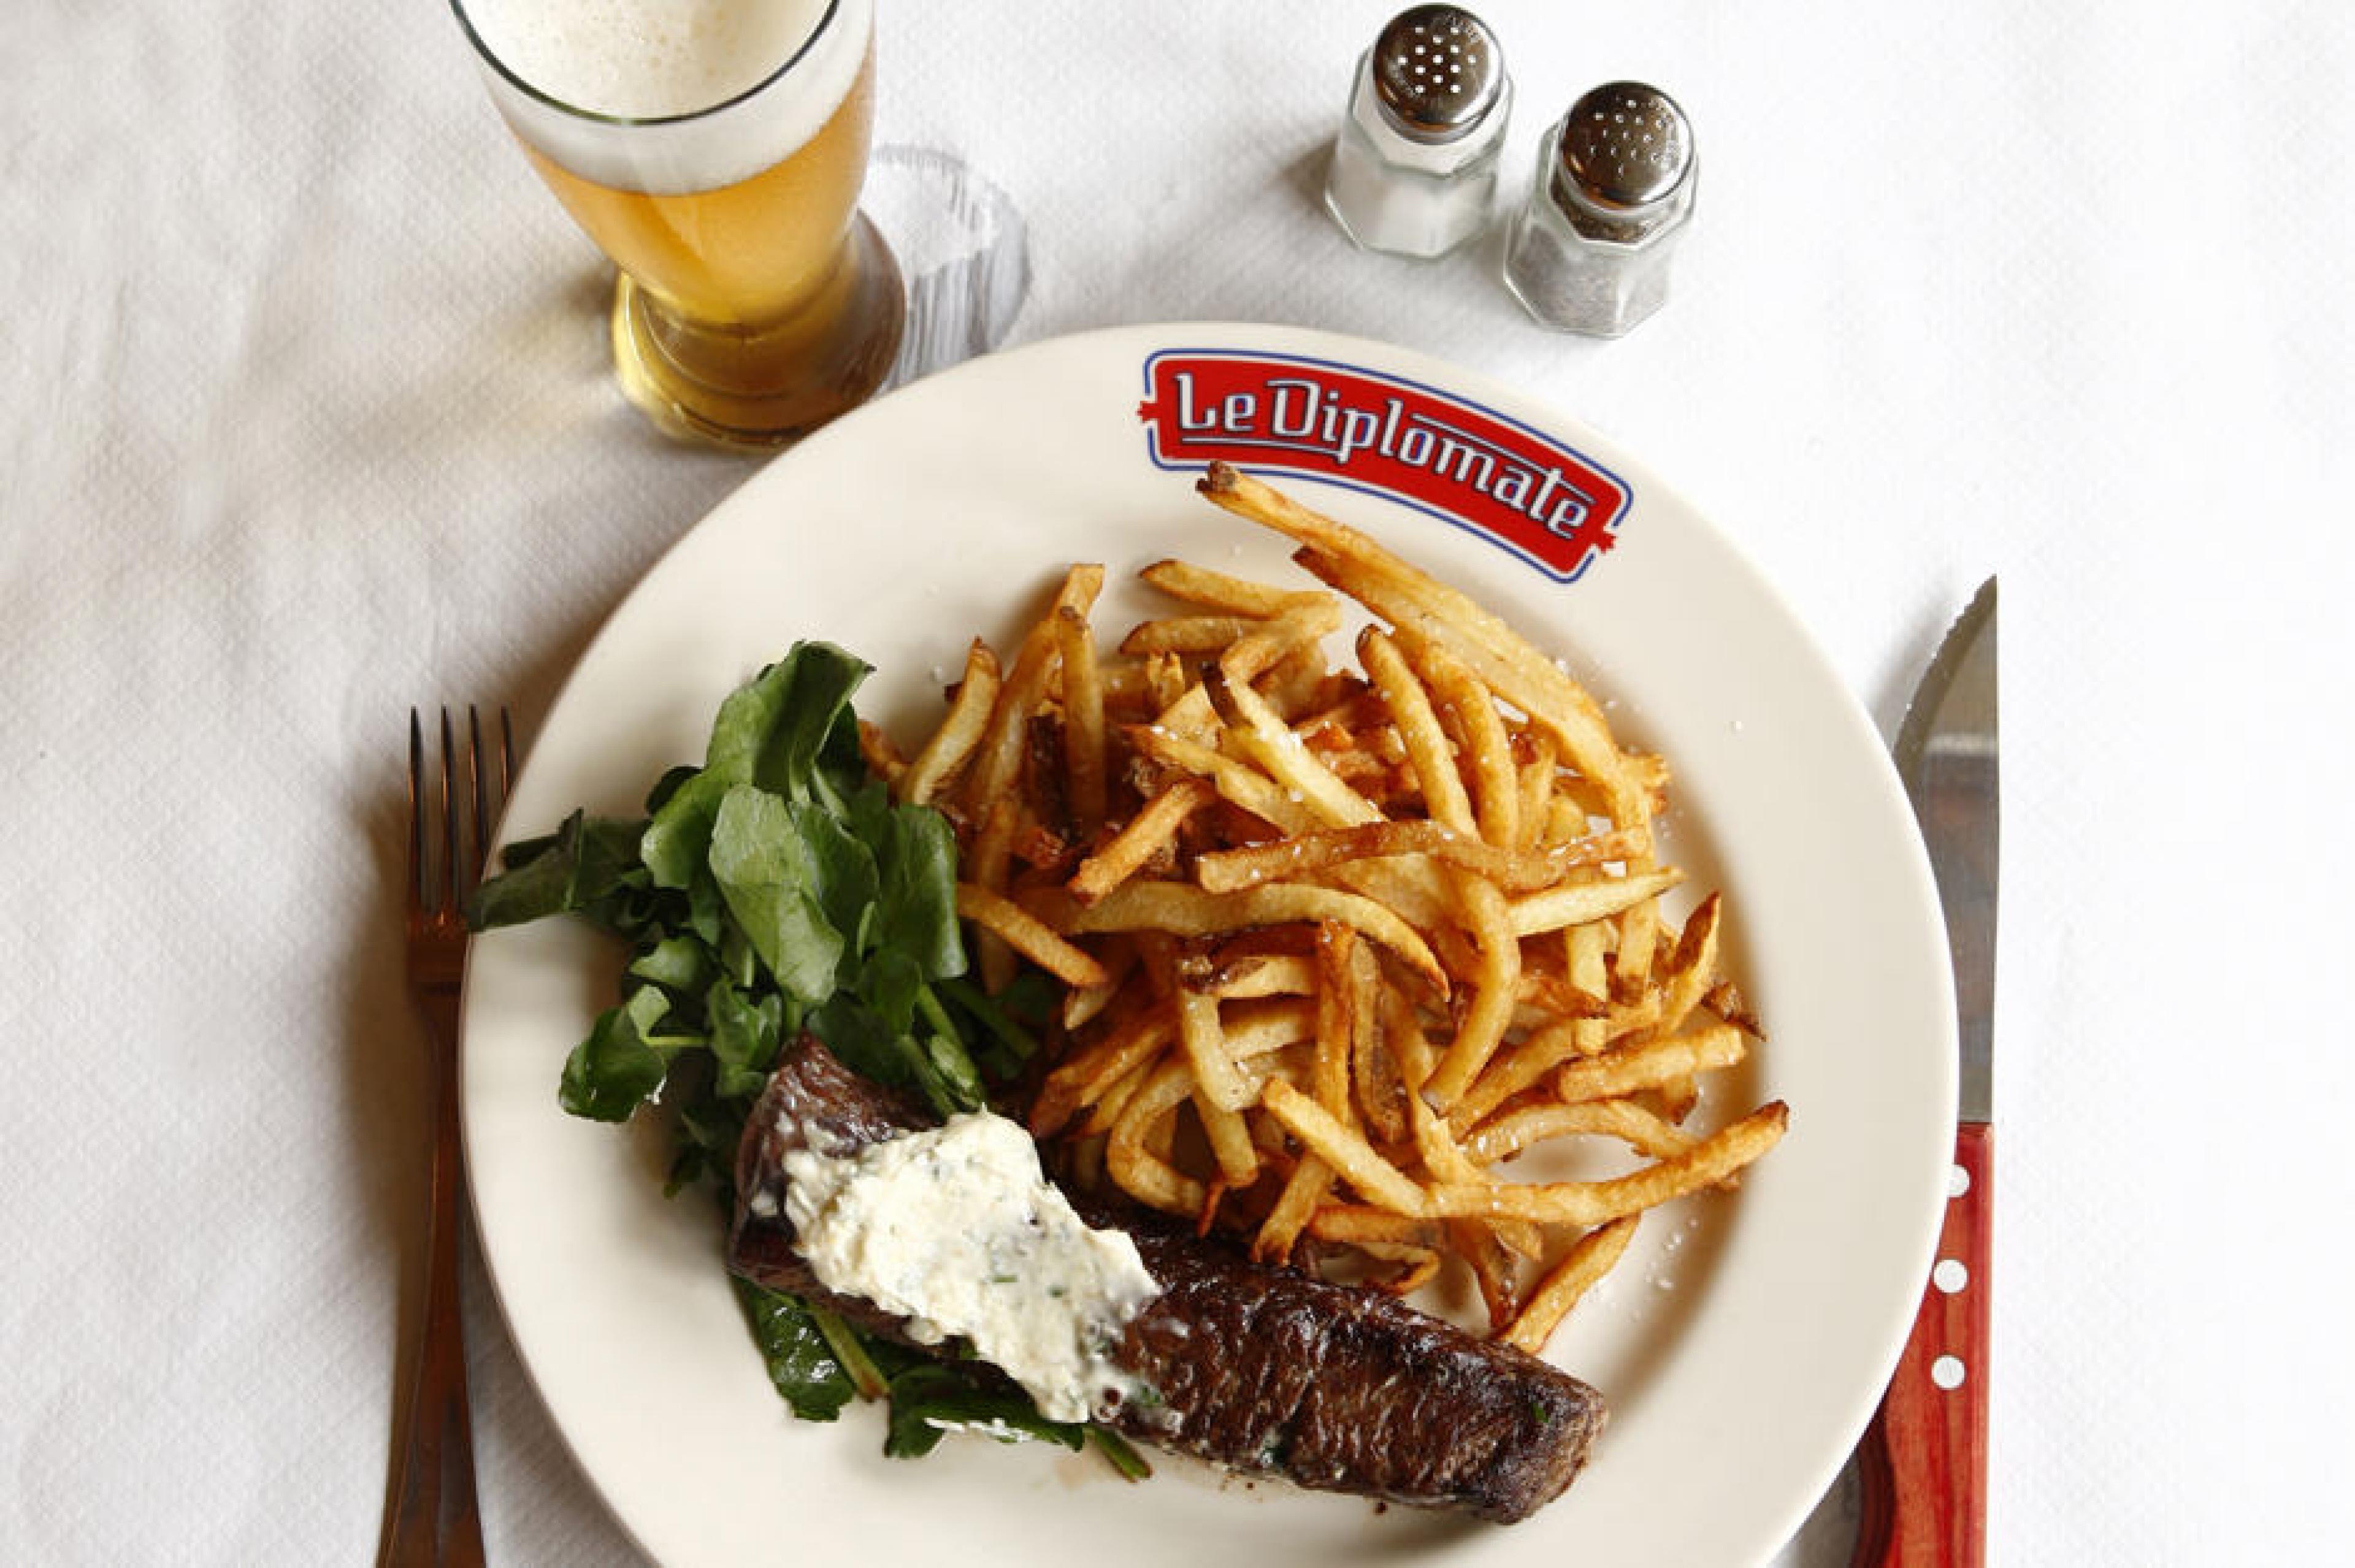 Steak and fries at Le Diplomate, Washington, D.C.